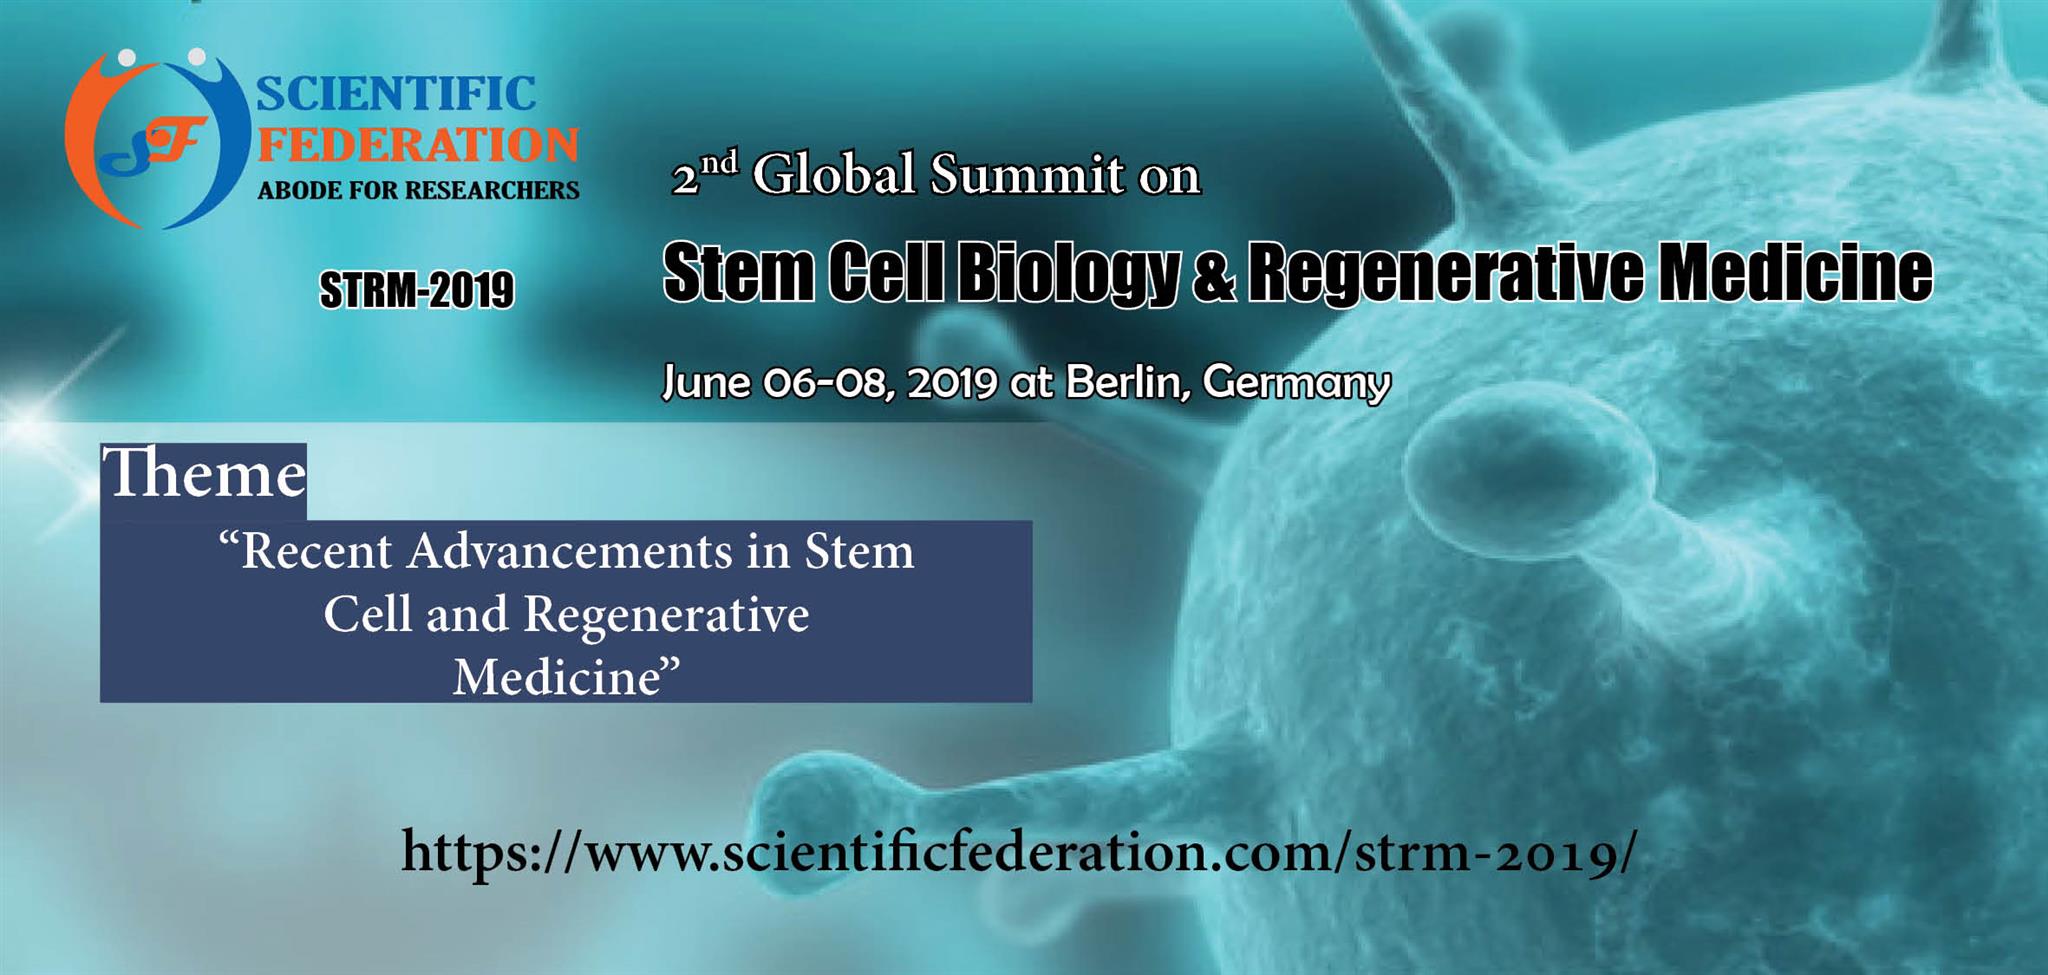 2nd Global Summit on Stem Cell & regenerative Medicine, Berlin, Germany